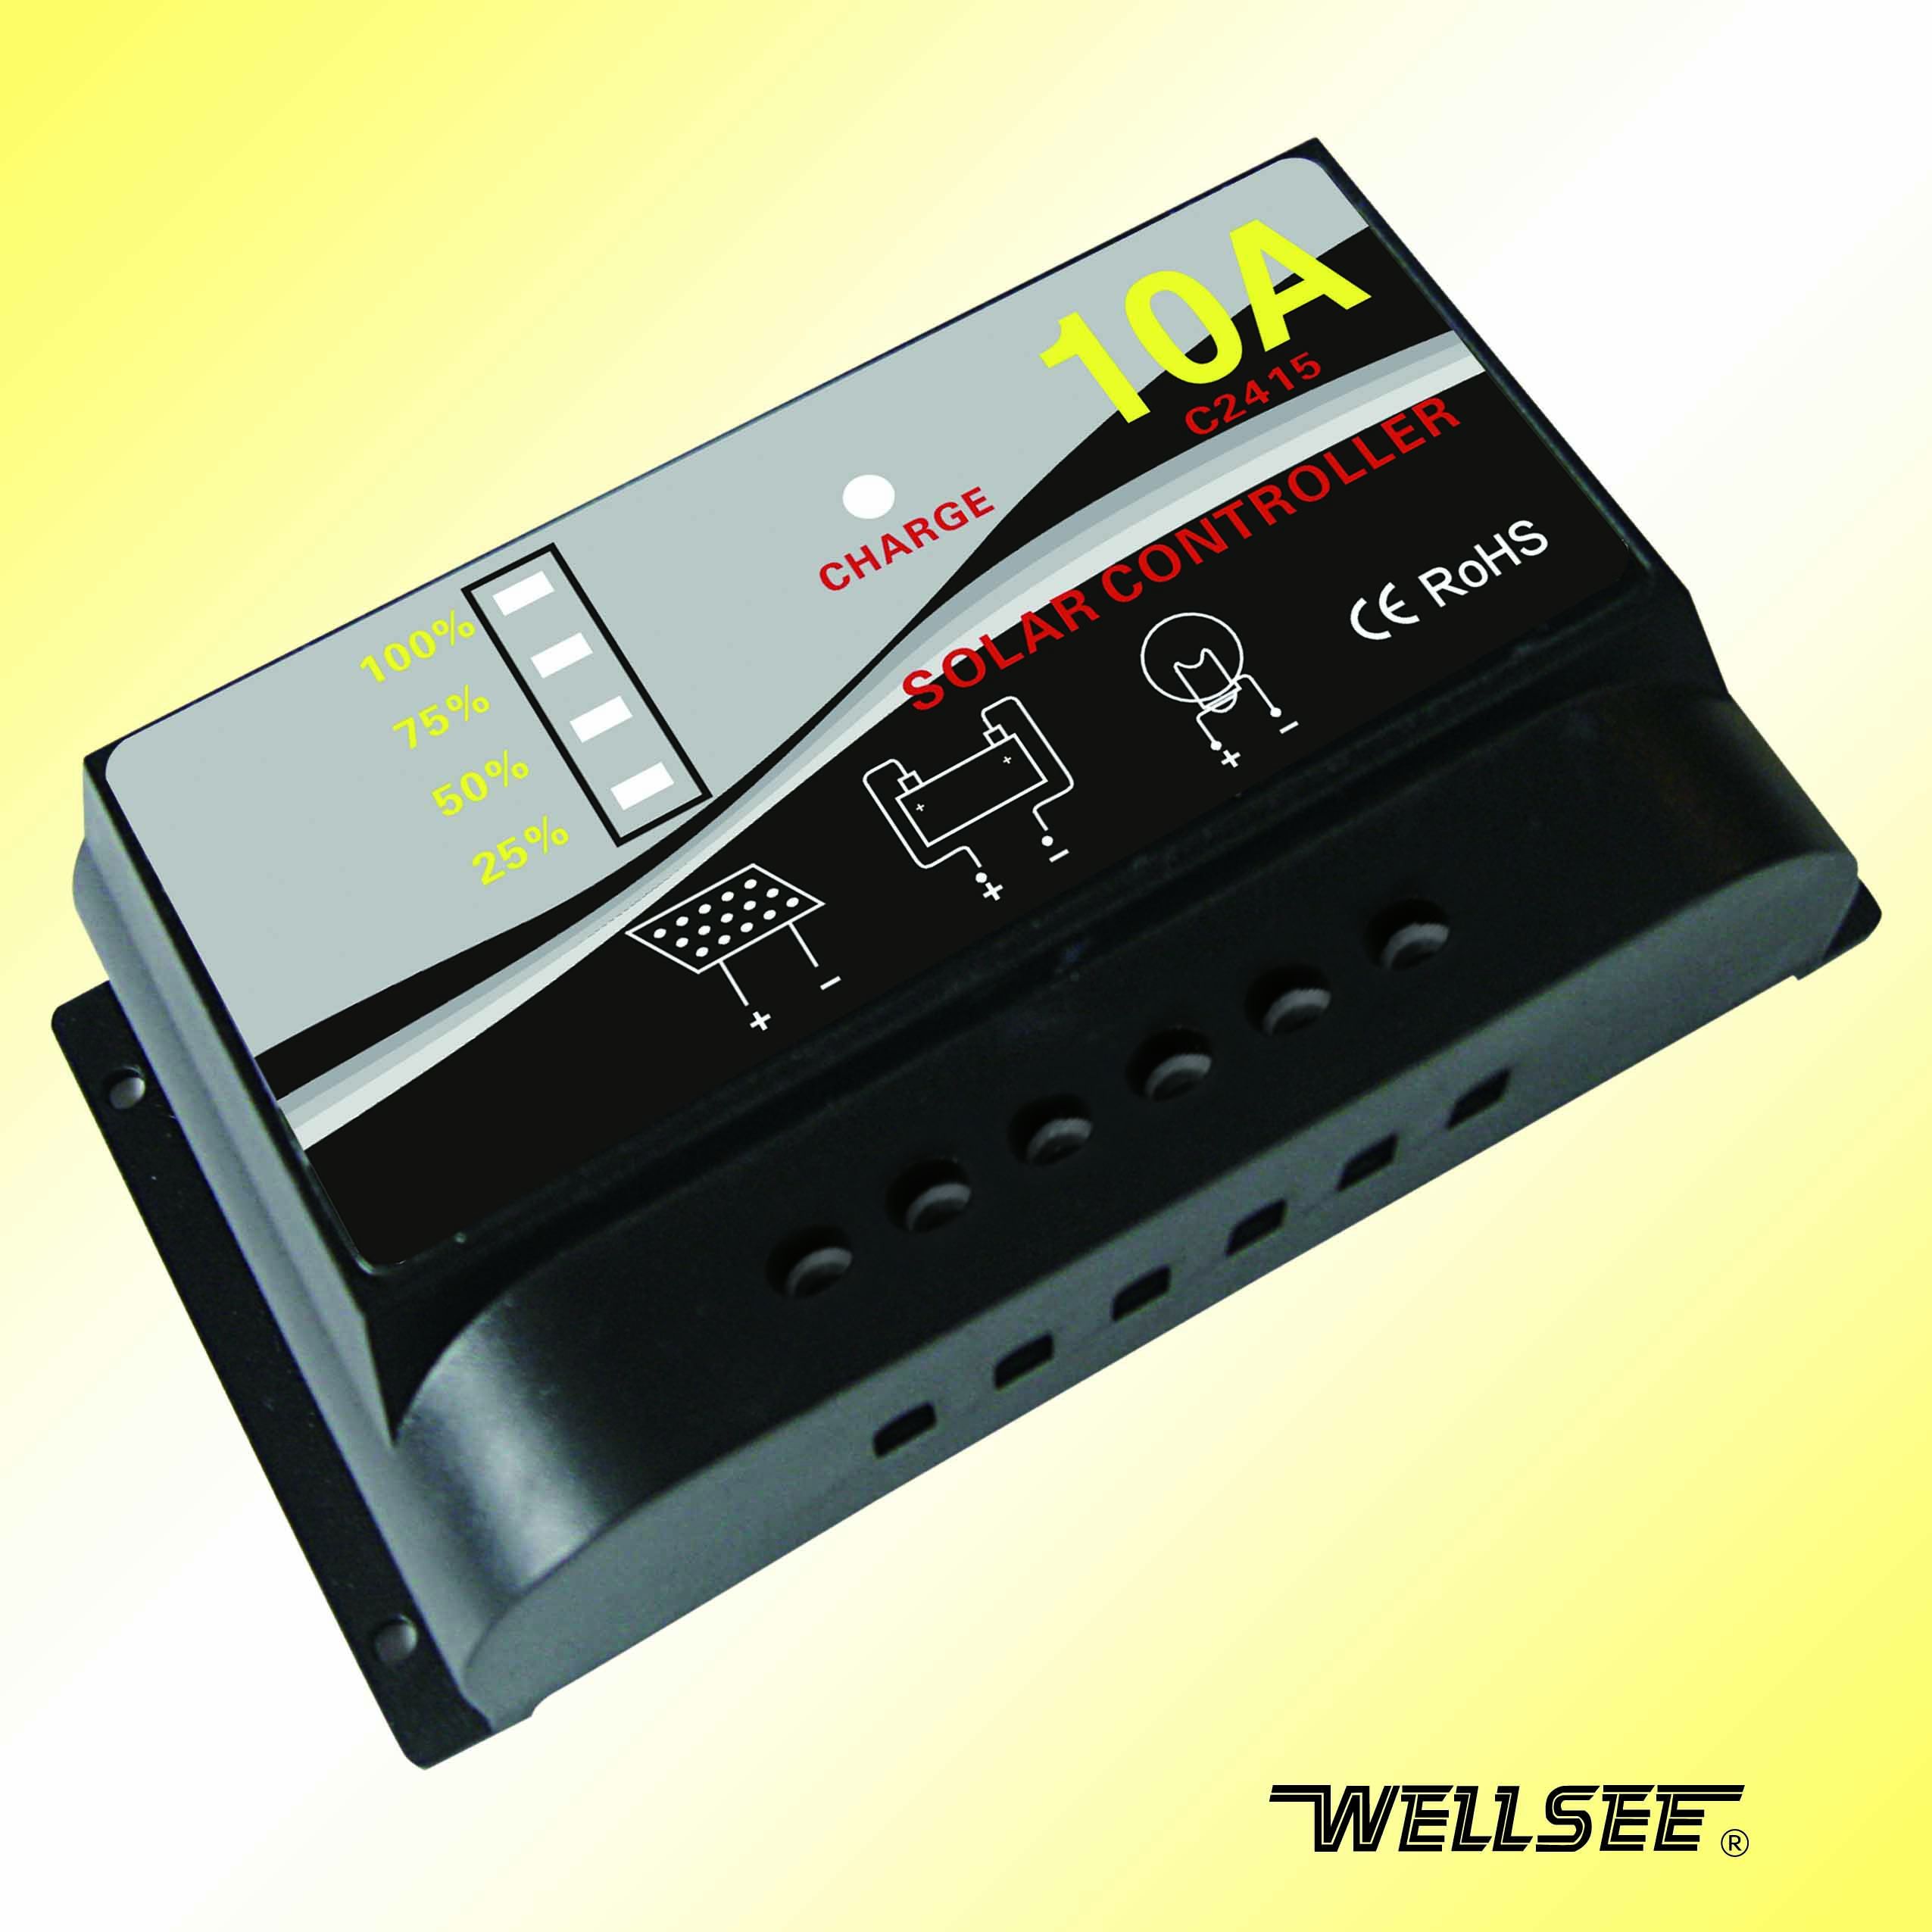  Wellsee солнечный контроллер WS-C2415 10A 12V/24 